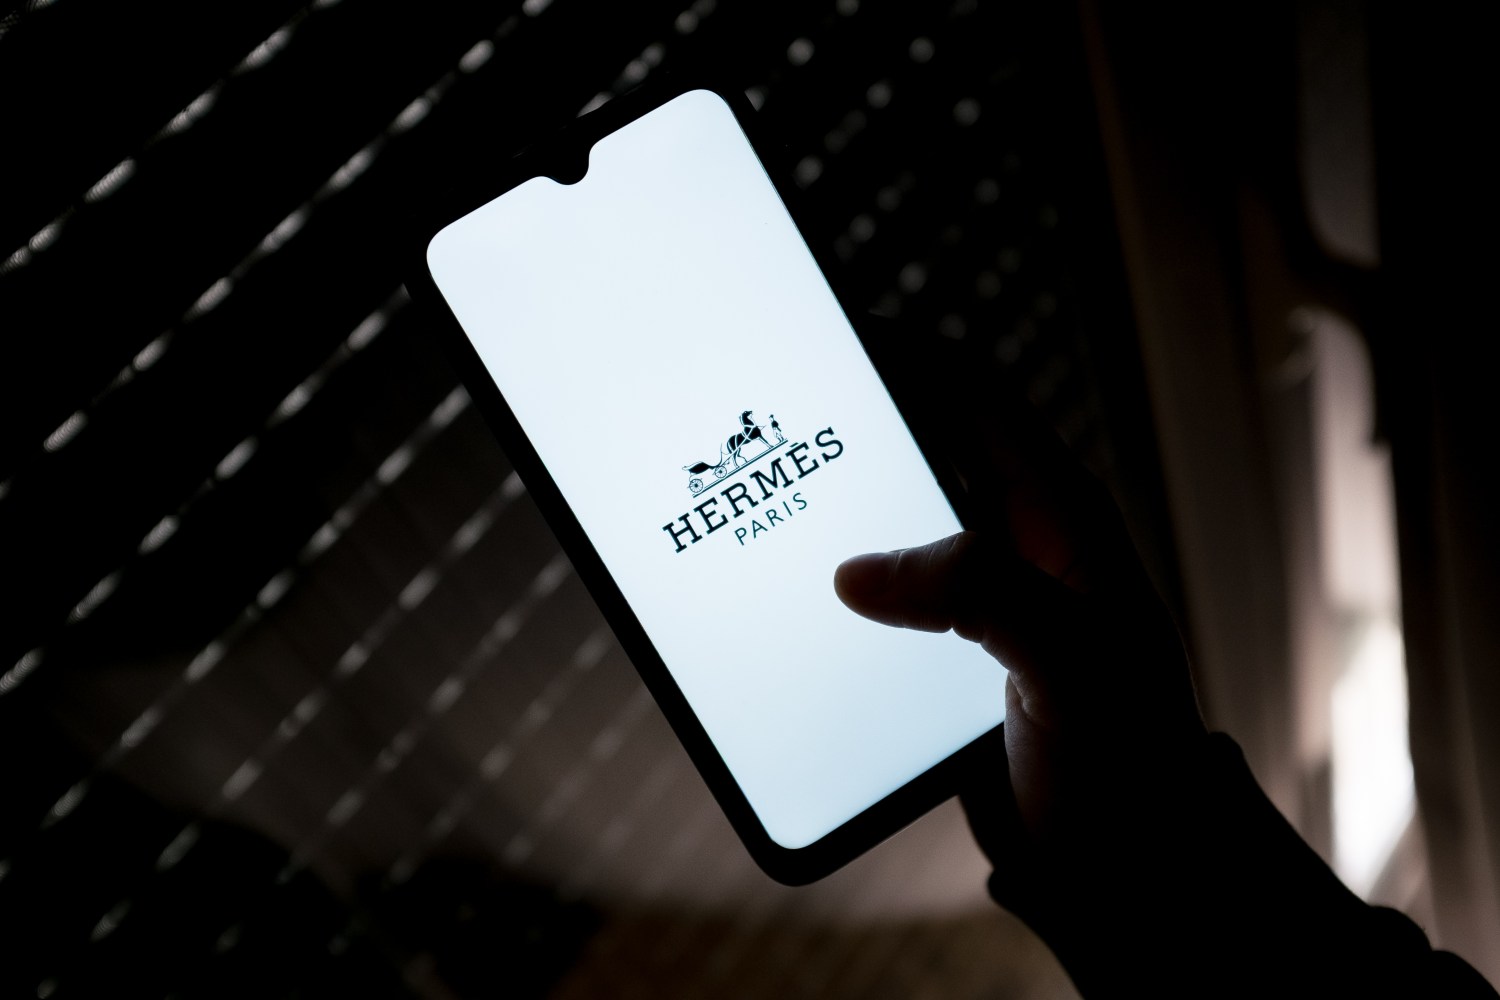 A Hermes Paris logo seen displayed on a smartphone screen